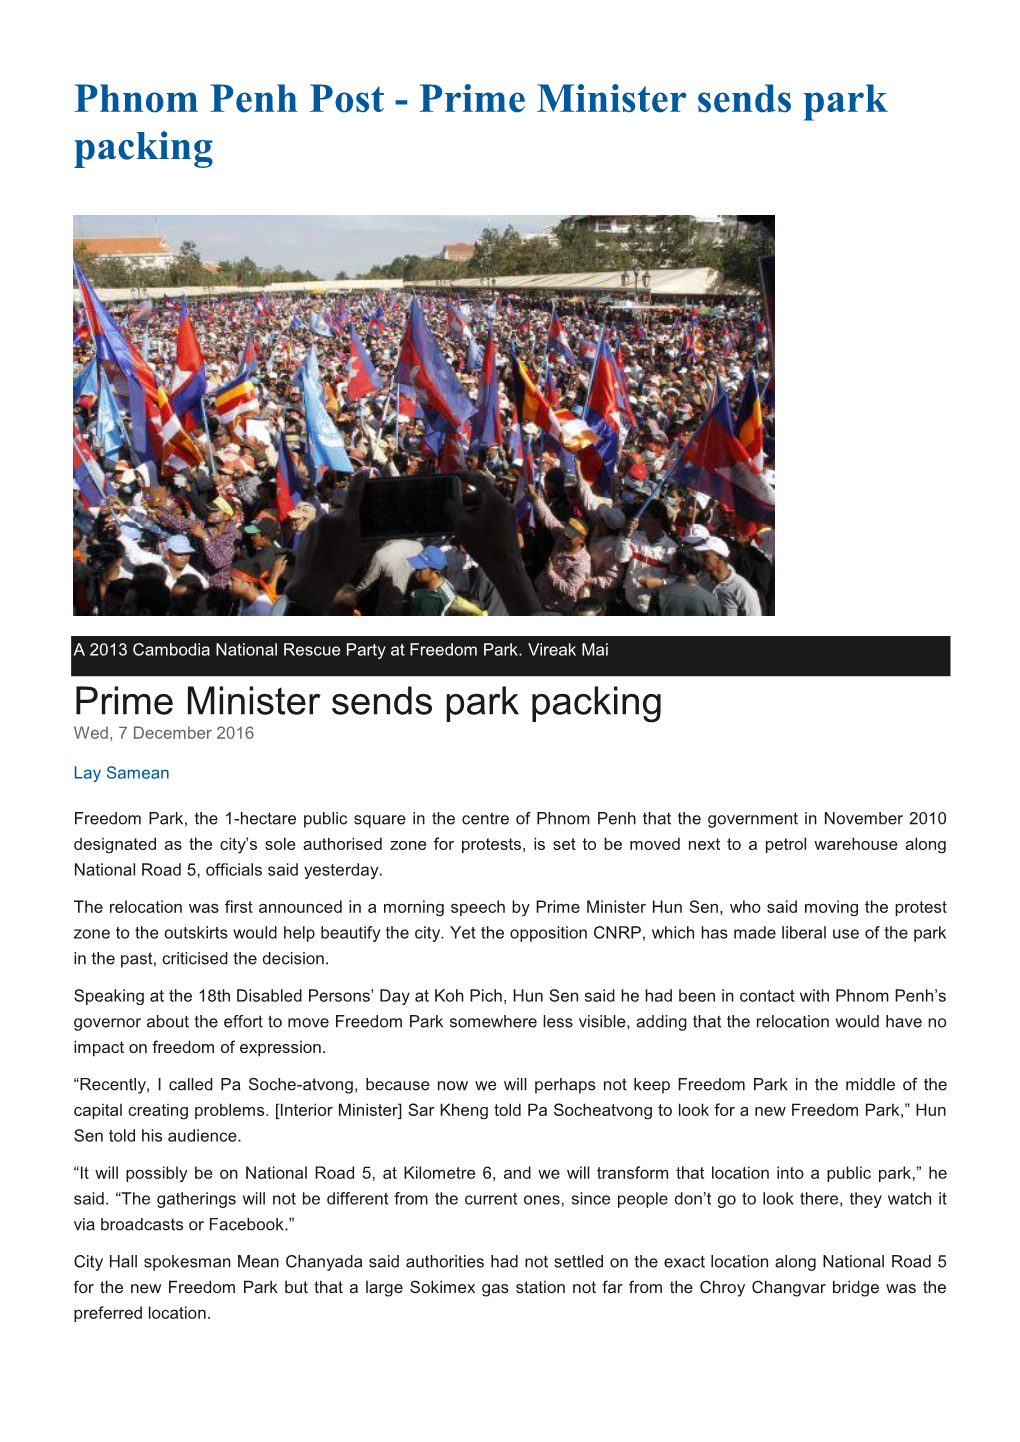 Prime Minister Sends Park Packing